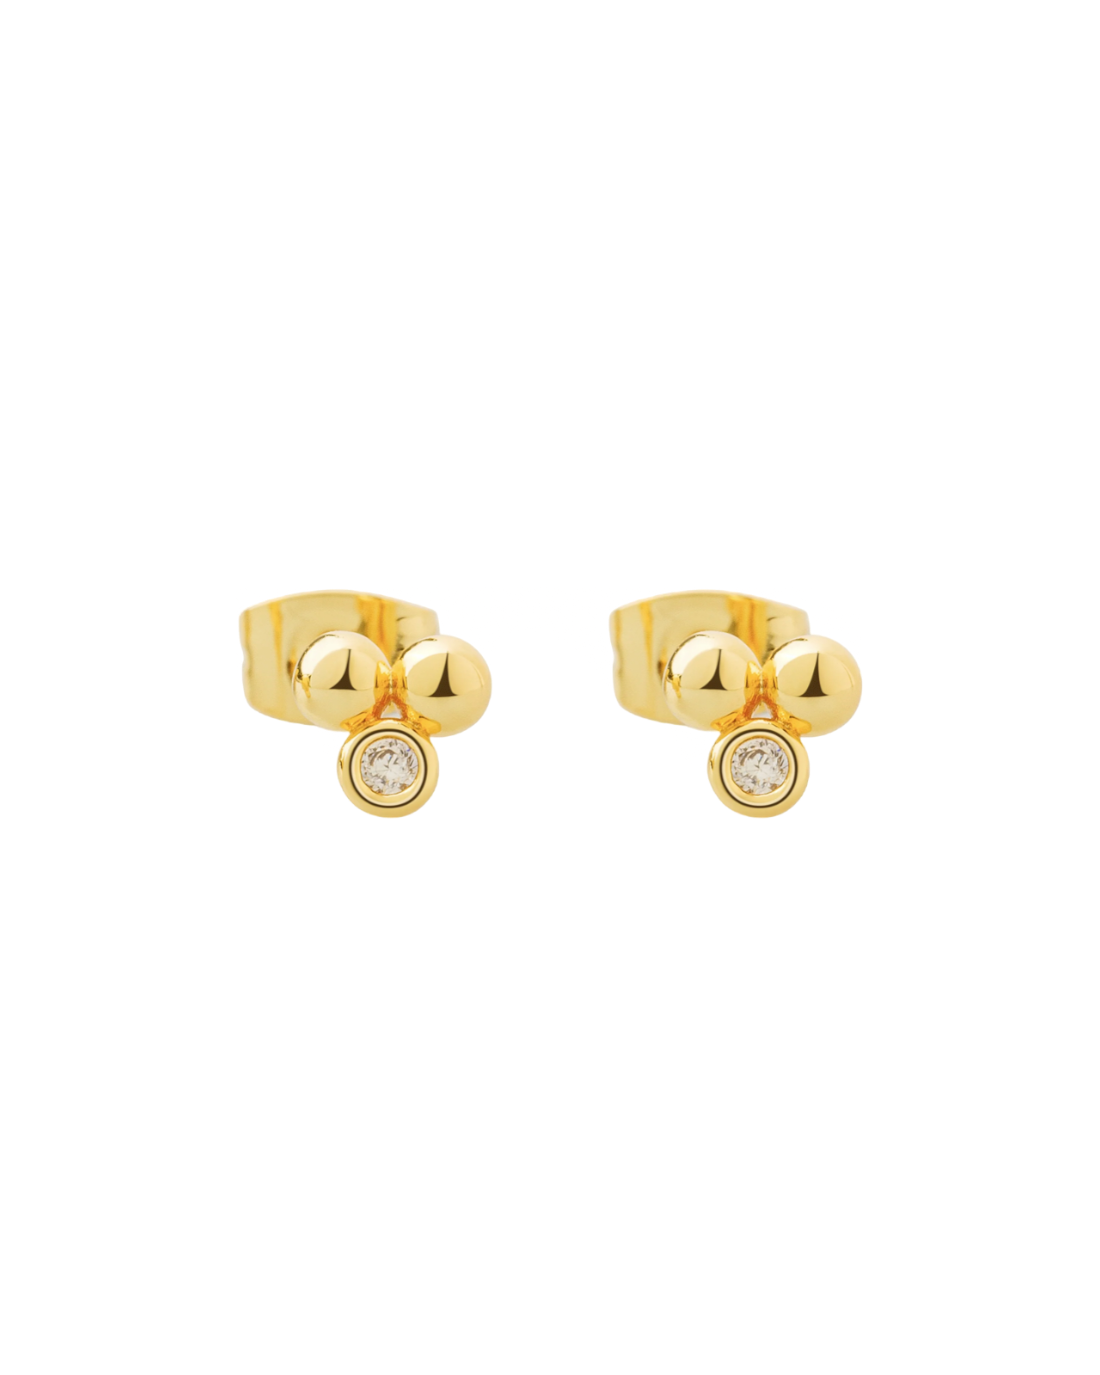 Mabel 14k Gold Stud Earring